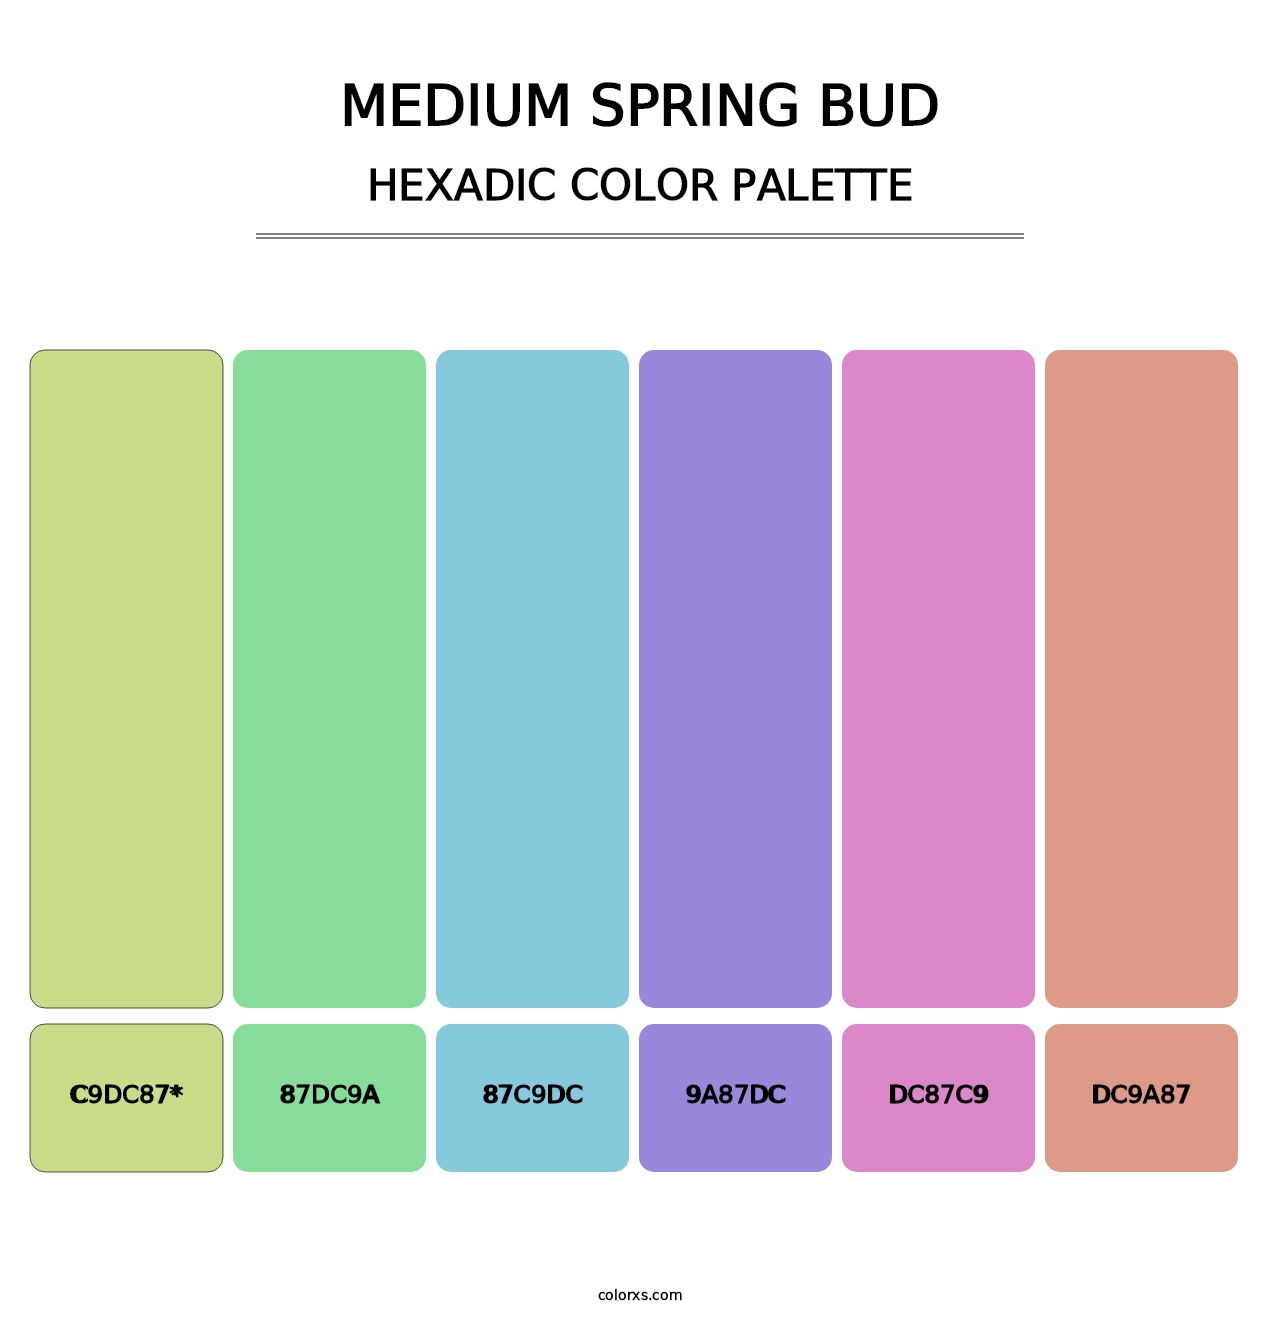 Medium Spring Bud - Hexadic Color Palette